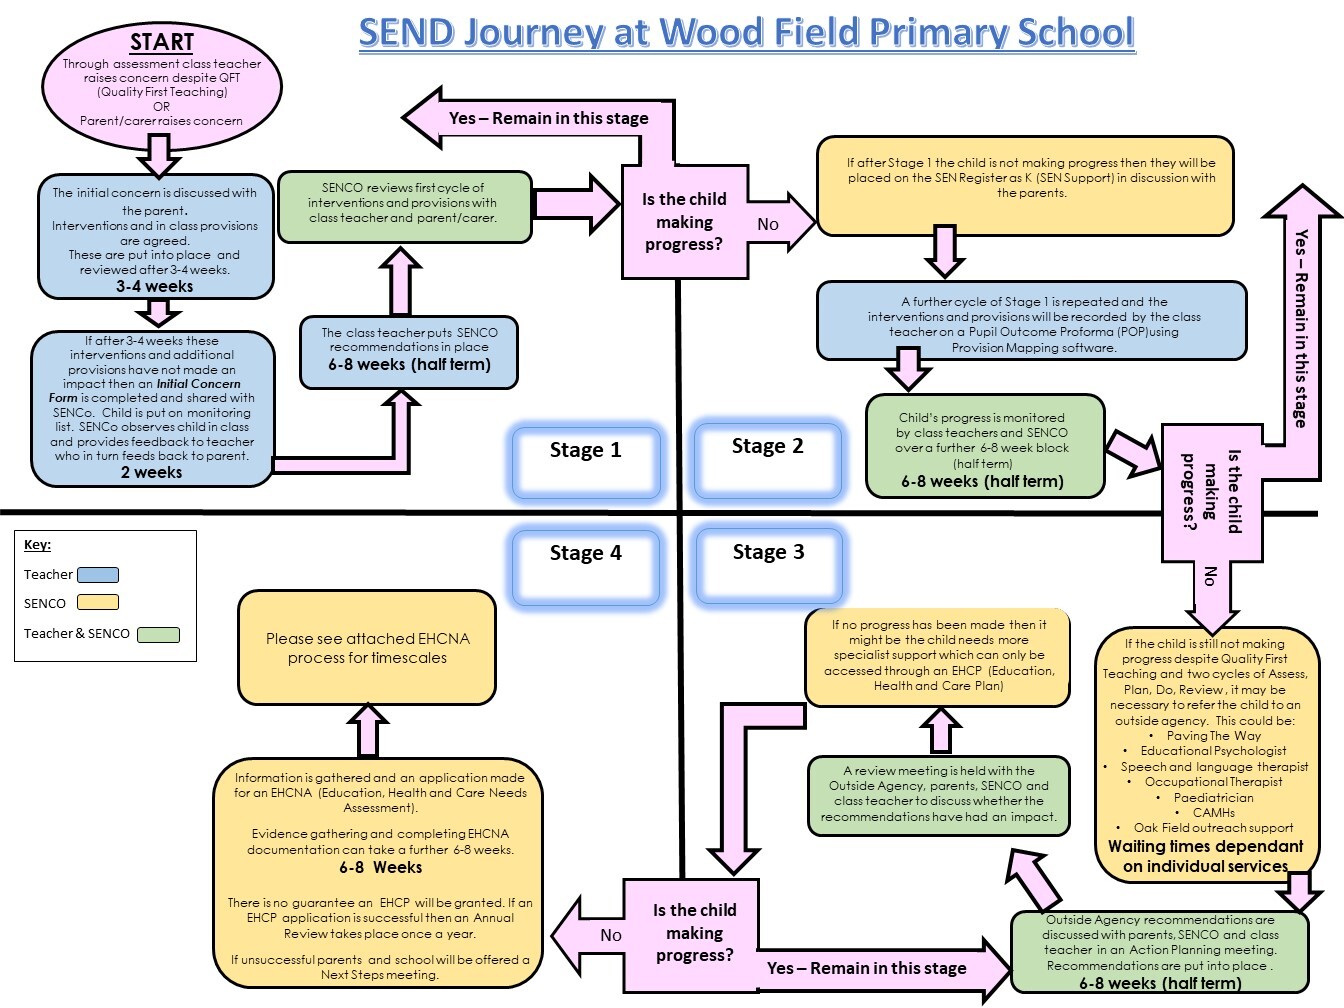 SEND Journey Flow Diagram alternative view WF